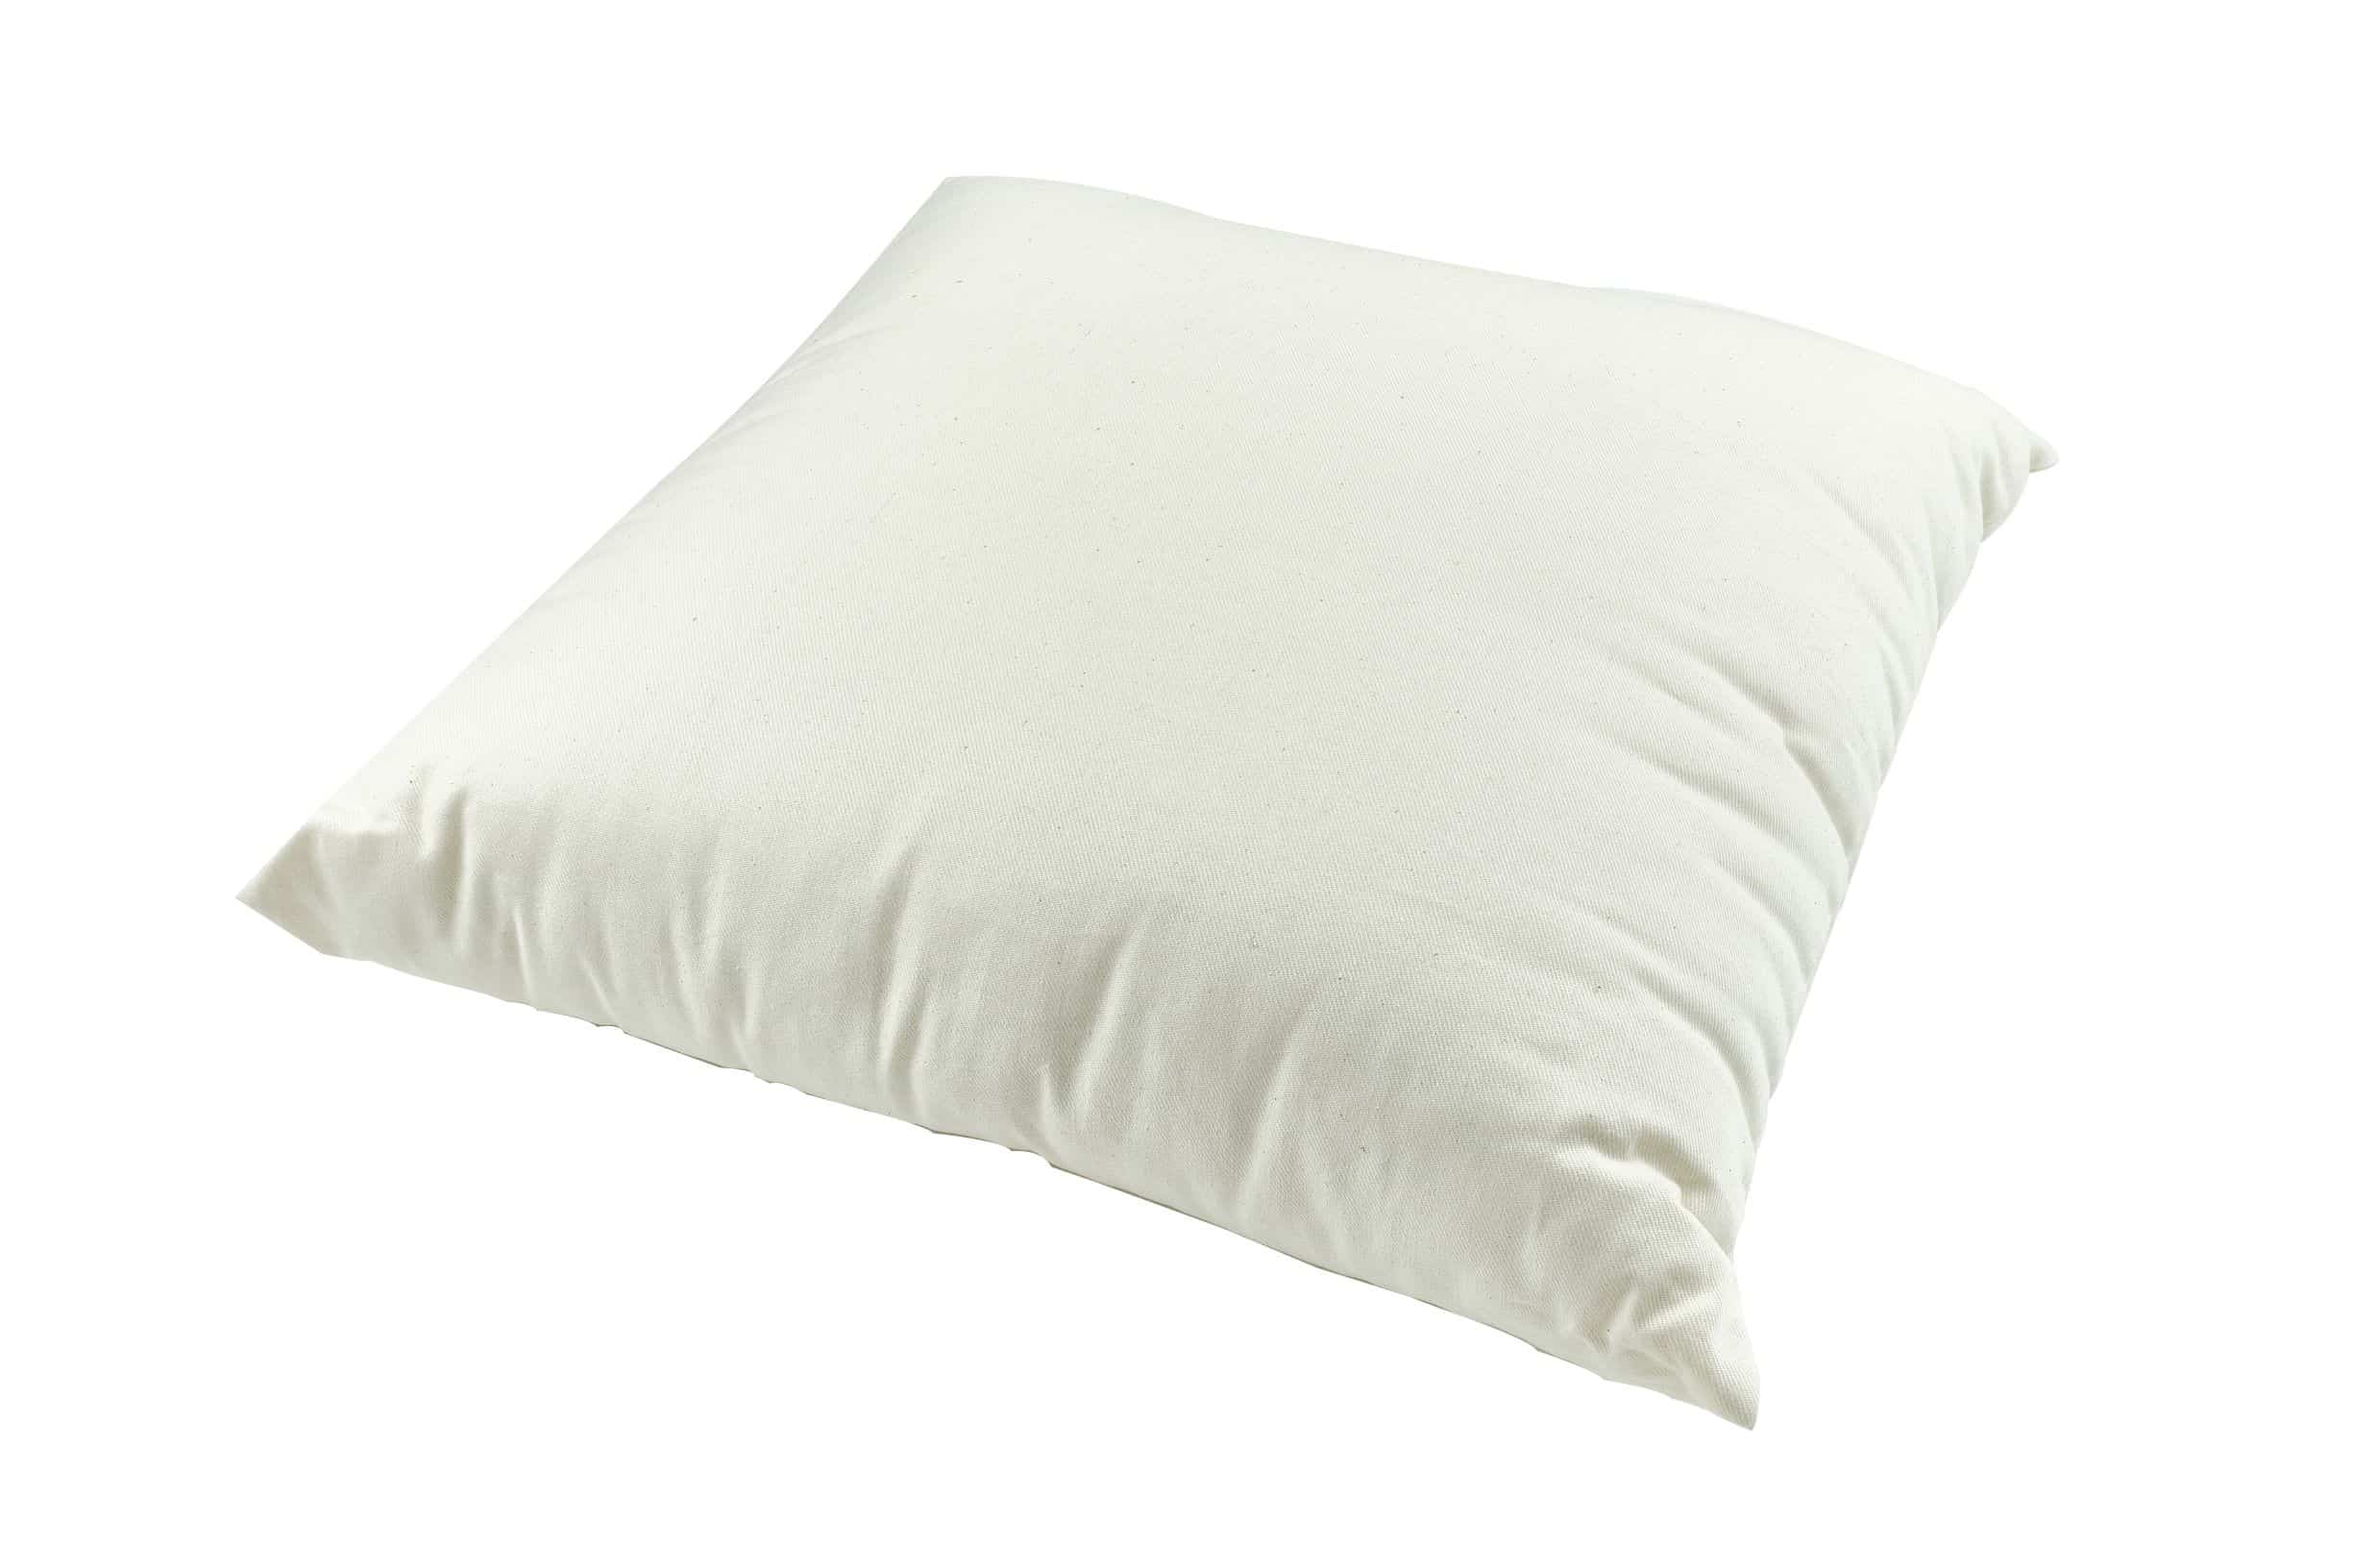 https://gimmethegoodstuff.org/wp-content/uploads/organic-cotton-decorative-pillow-inserts-132167585543638005.jpg